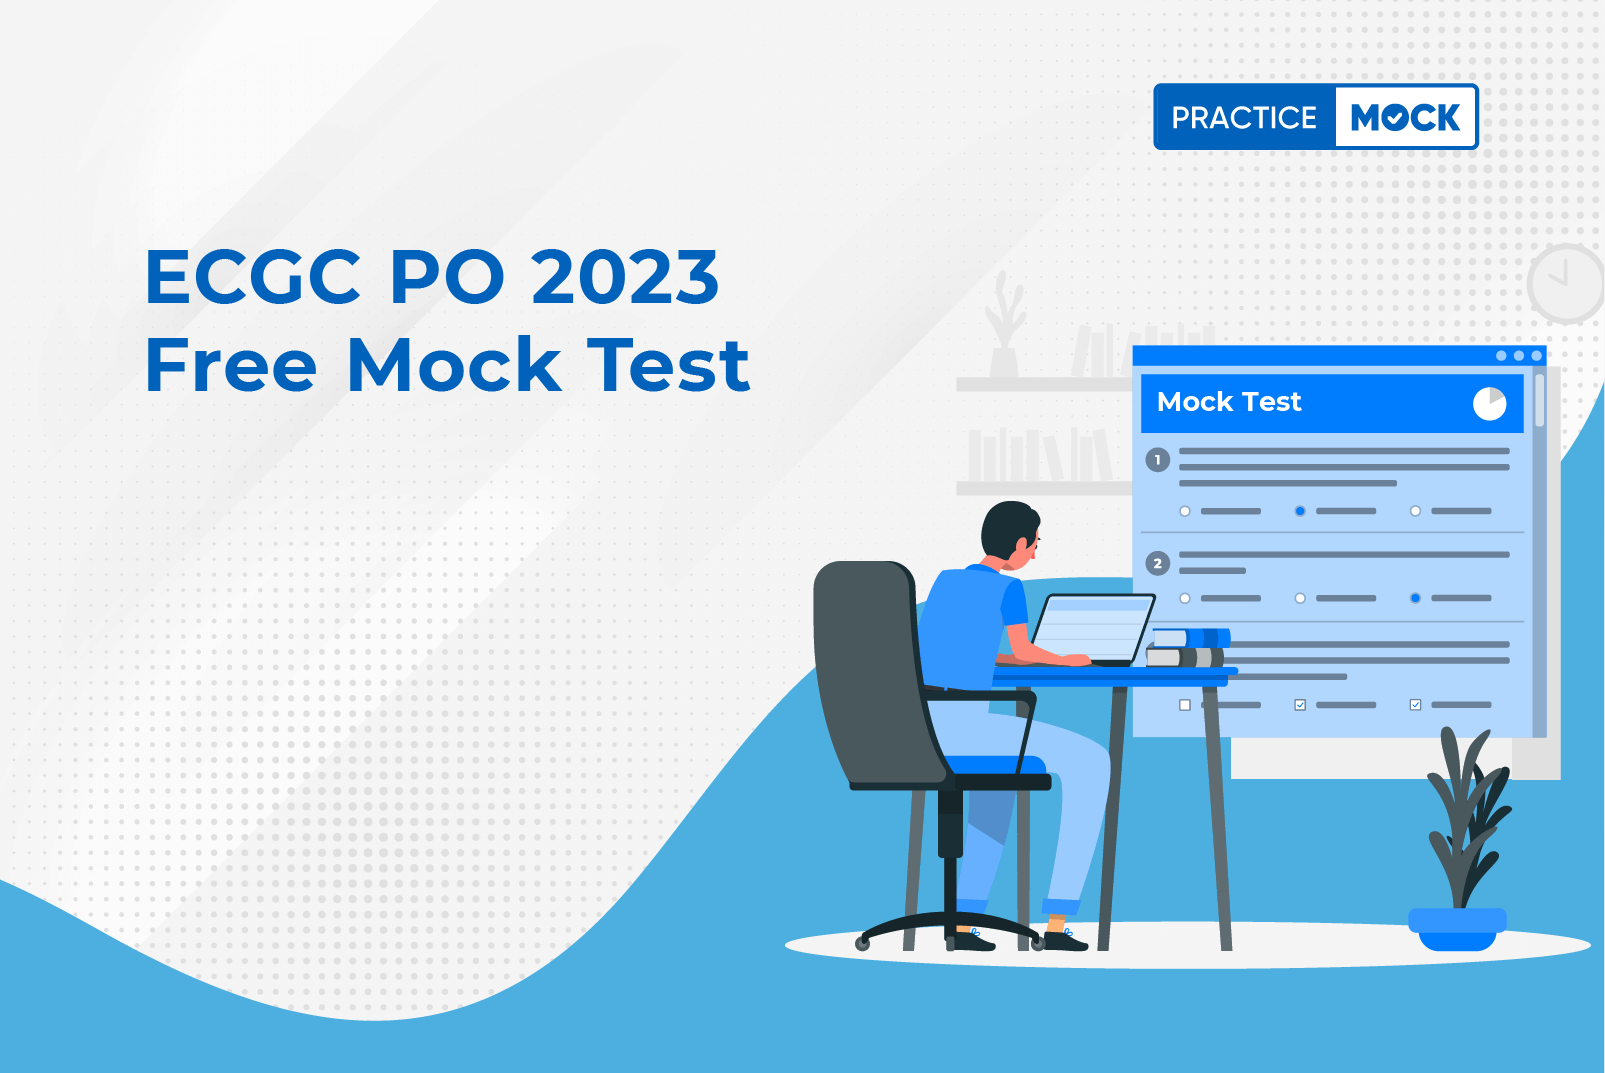 ECGC PO 2023 Free Mock Test